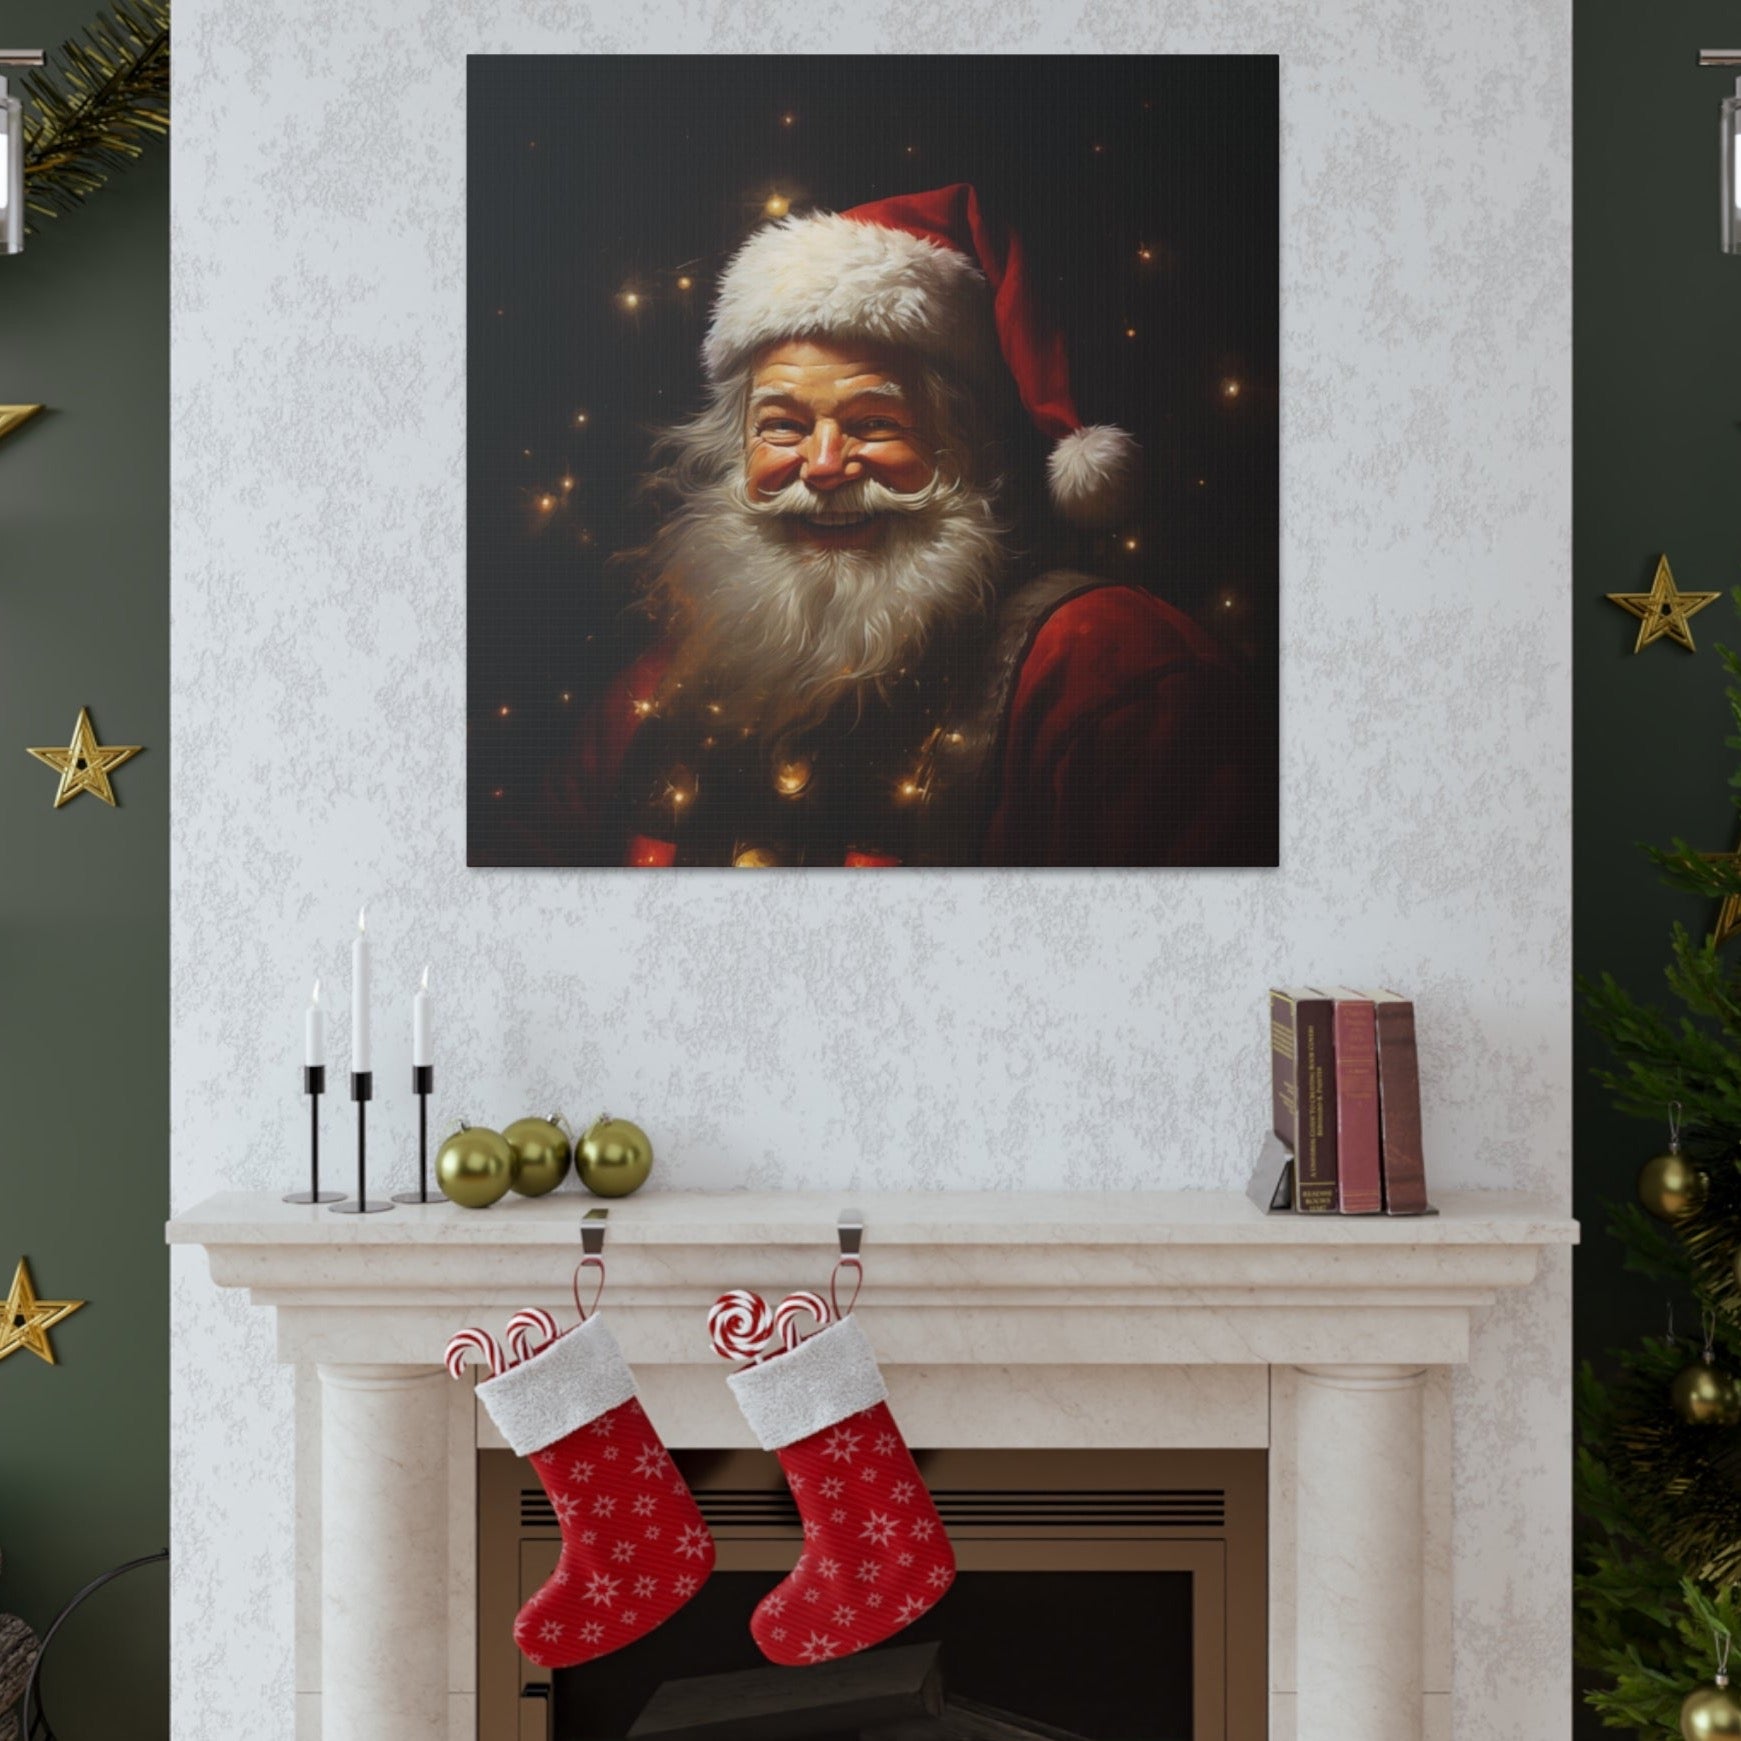 Christmas Santa Claus decorations